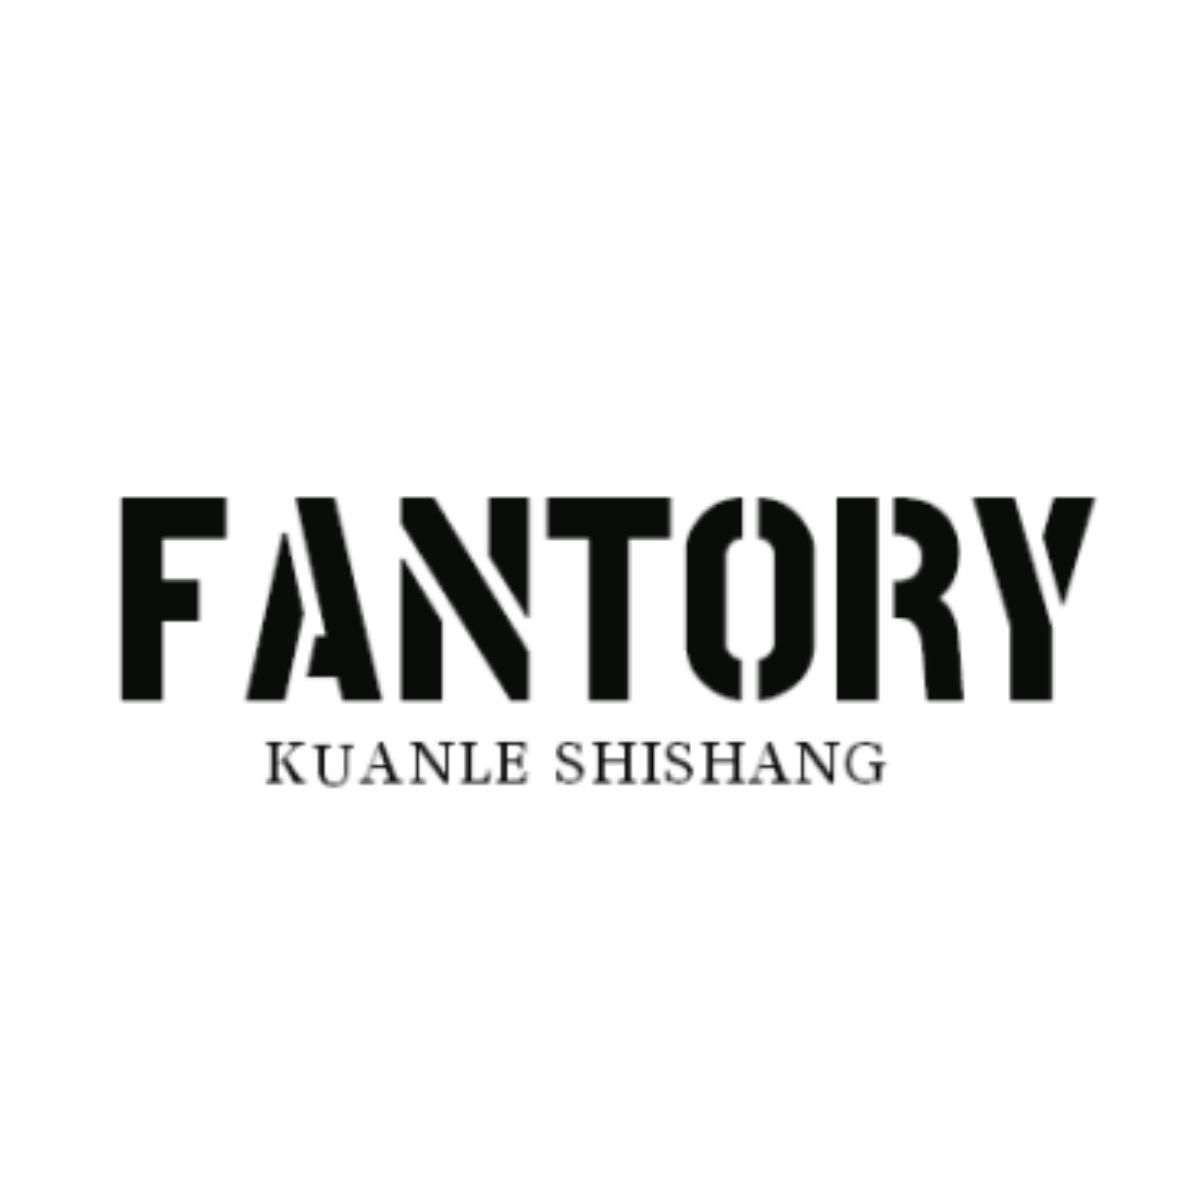 FANTORY KUANLE SHISHANG